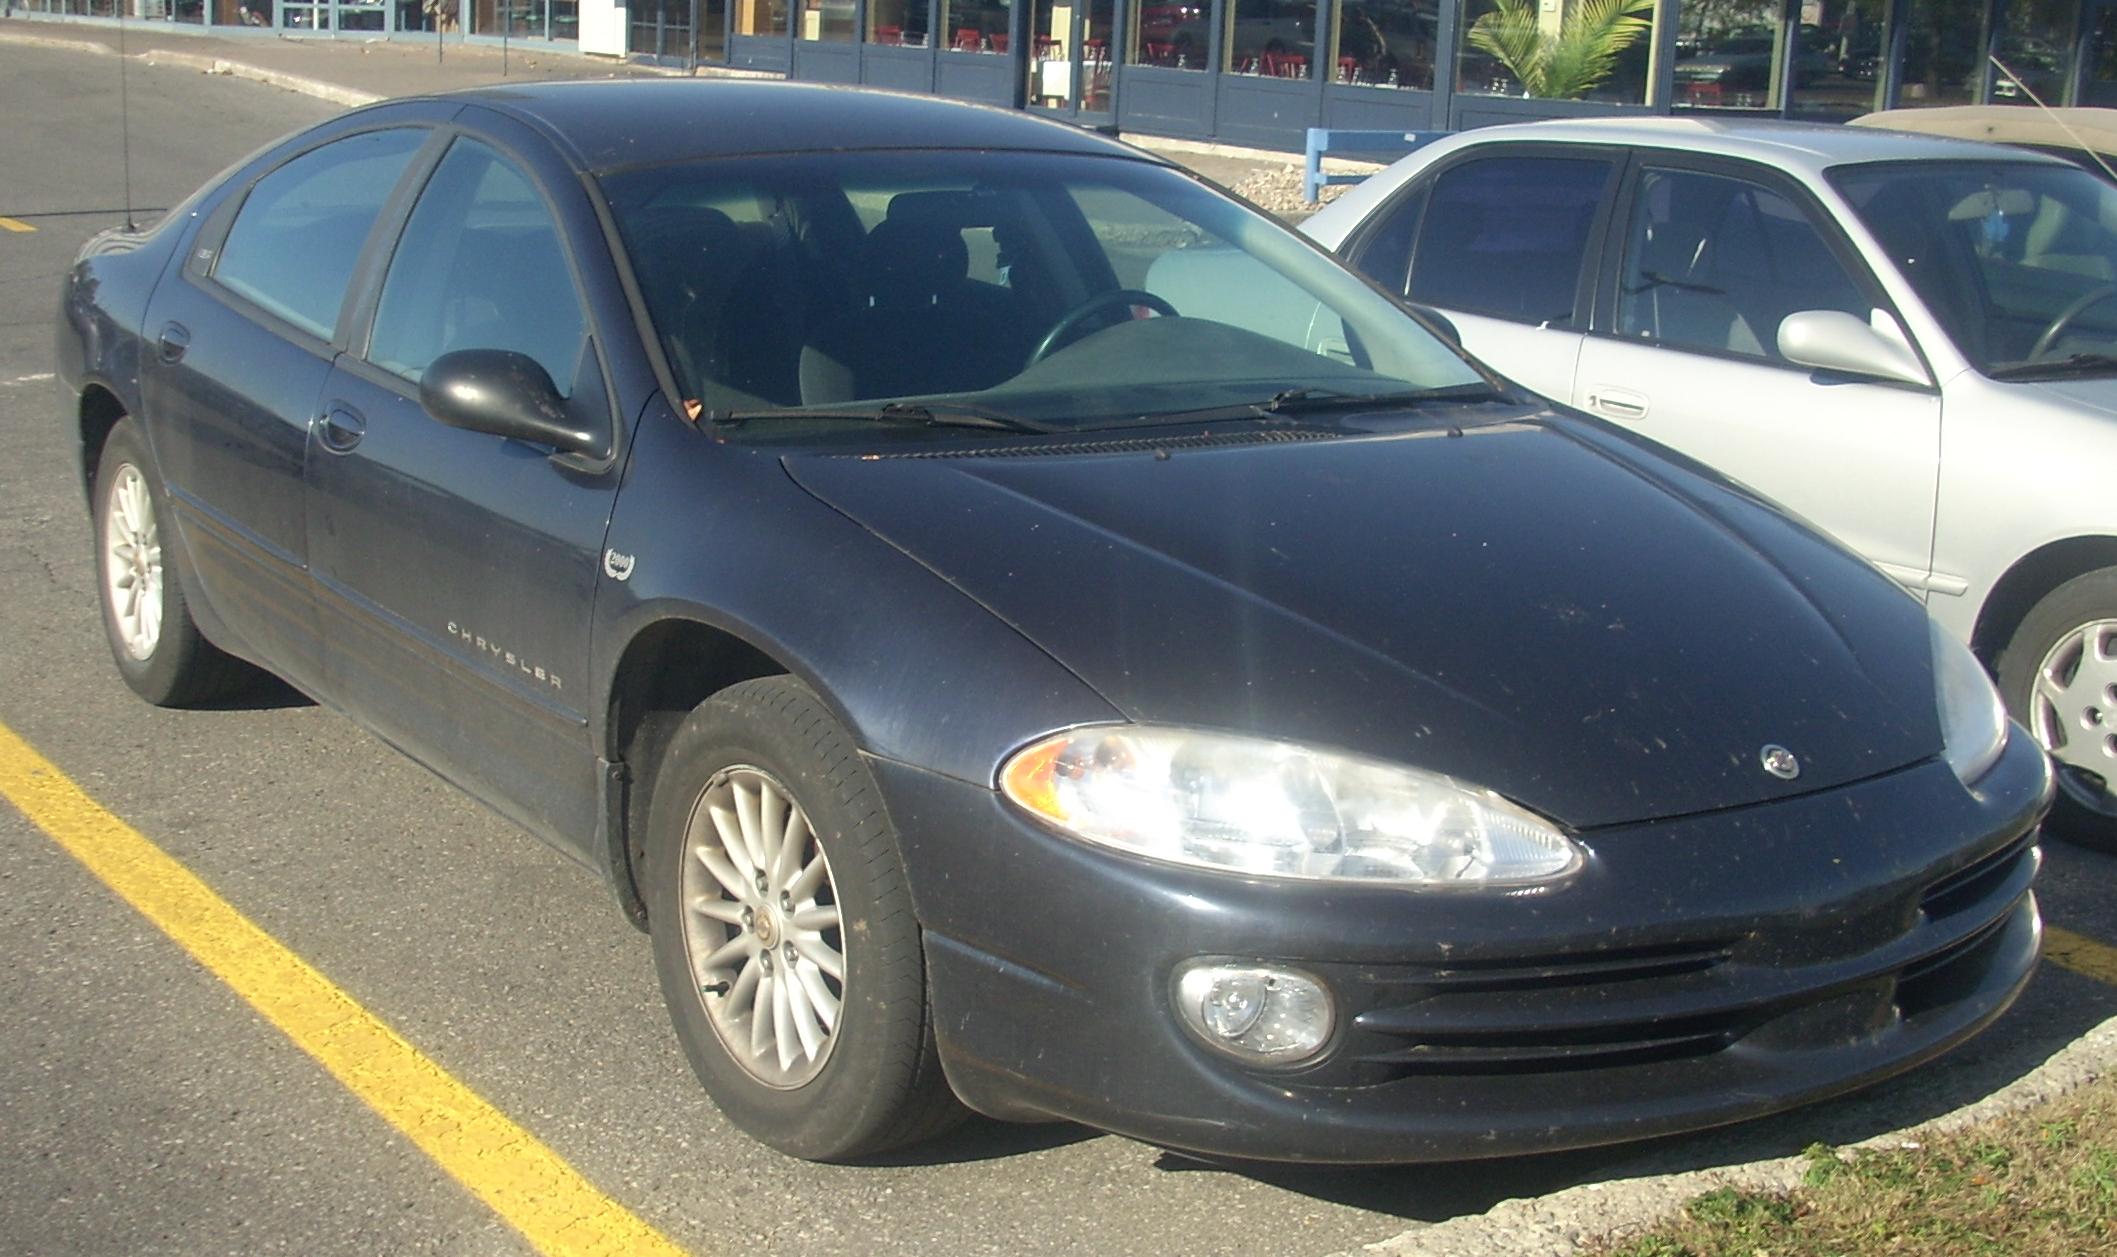 File:2nd Generation Chrysler Intrepid.jpg - Wikipedia